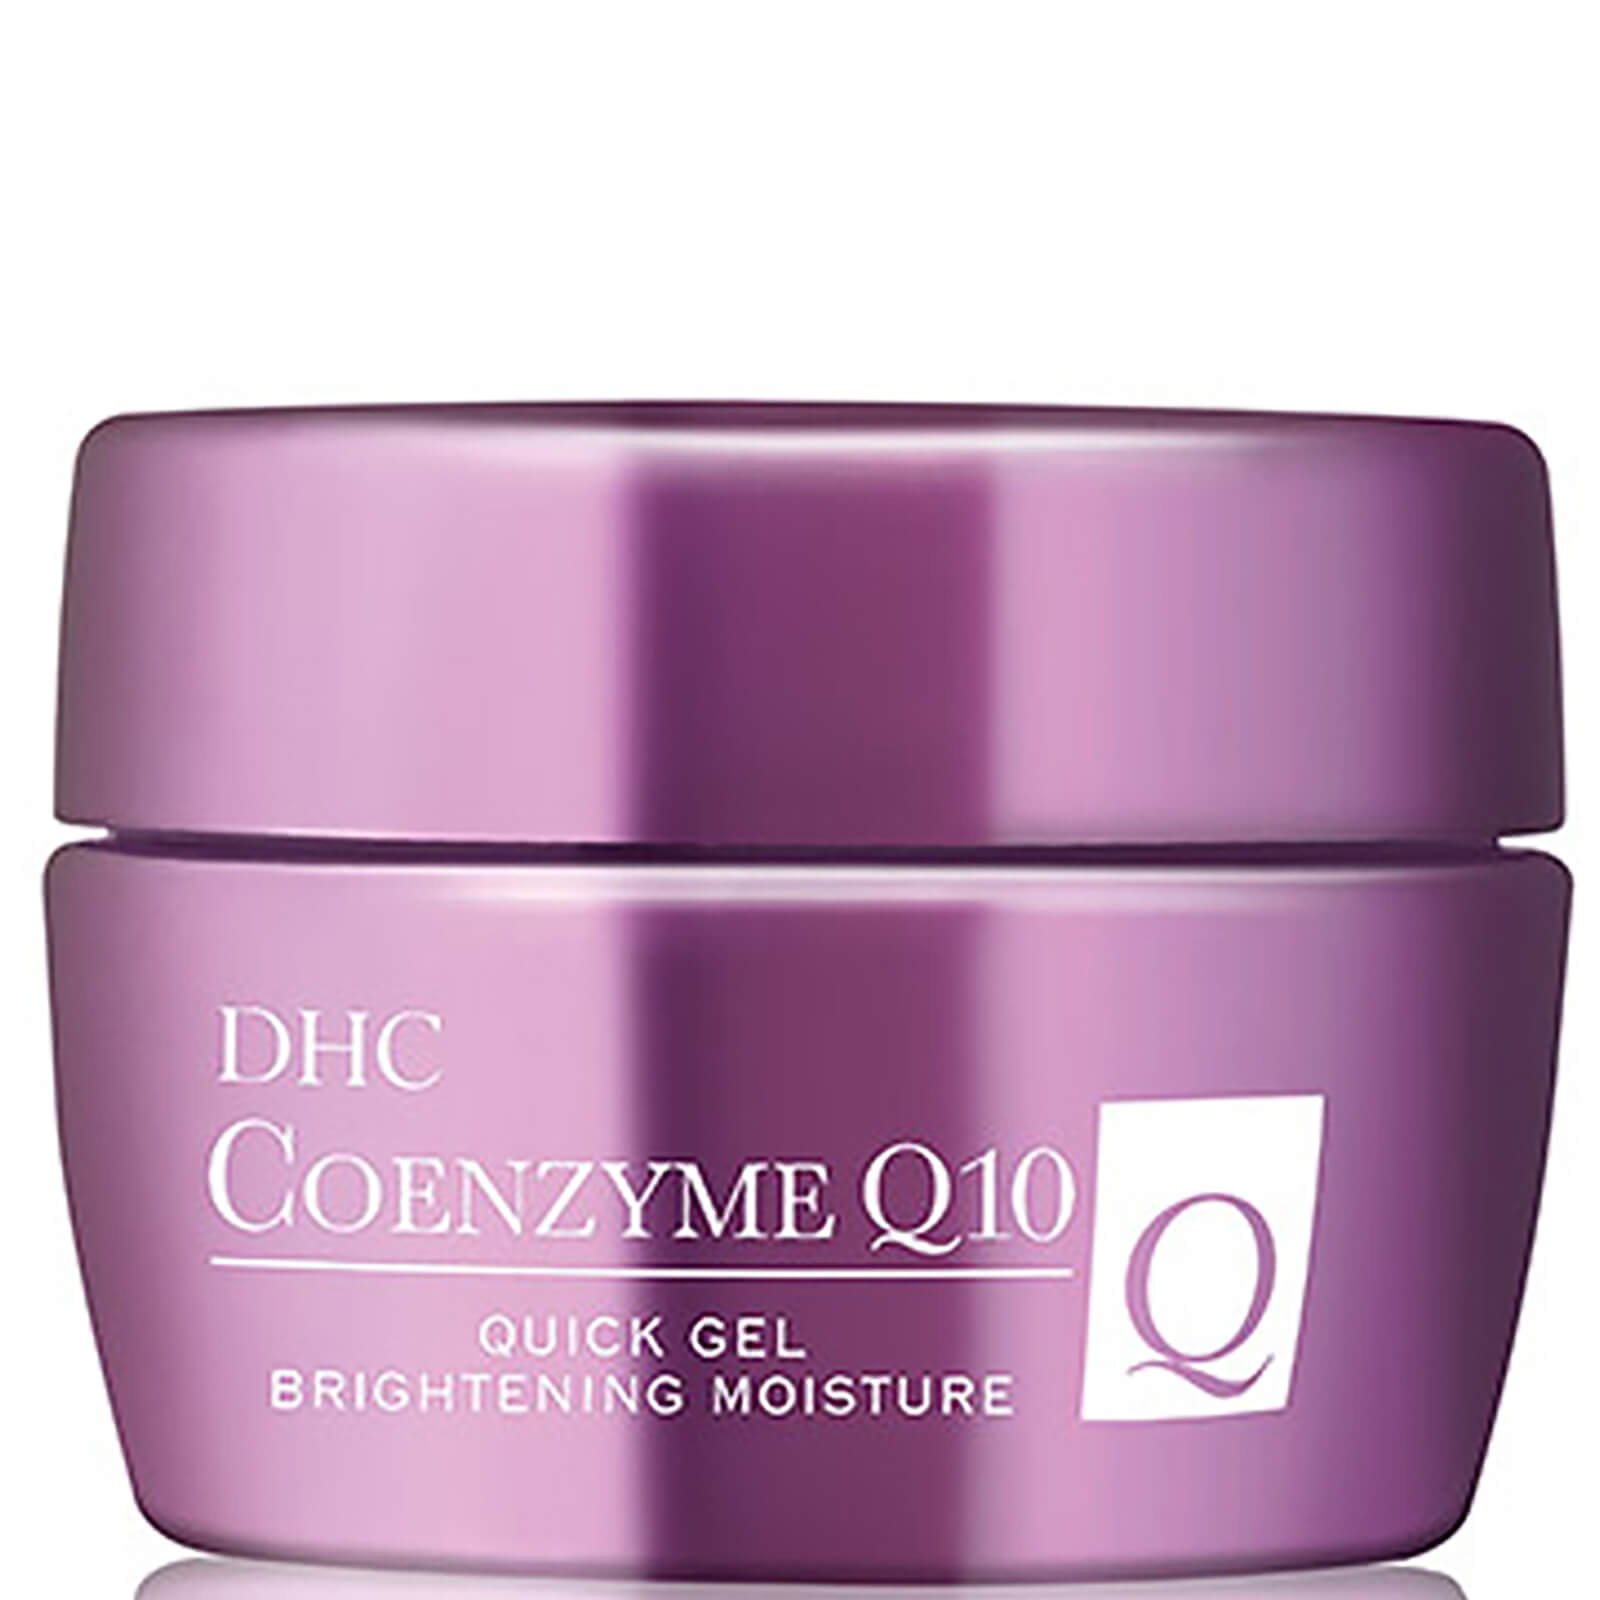 DHC CoQ10 Quick Gel Brightening Moisture | SkinStore